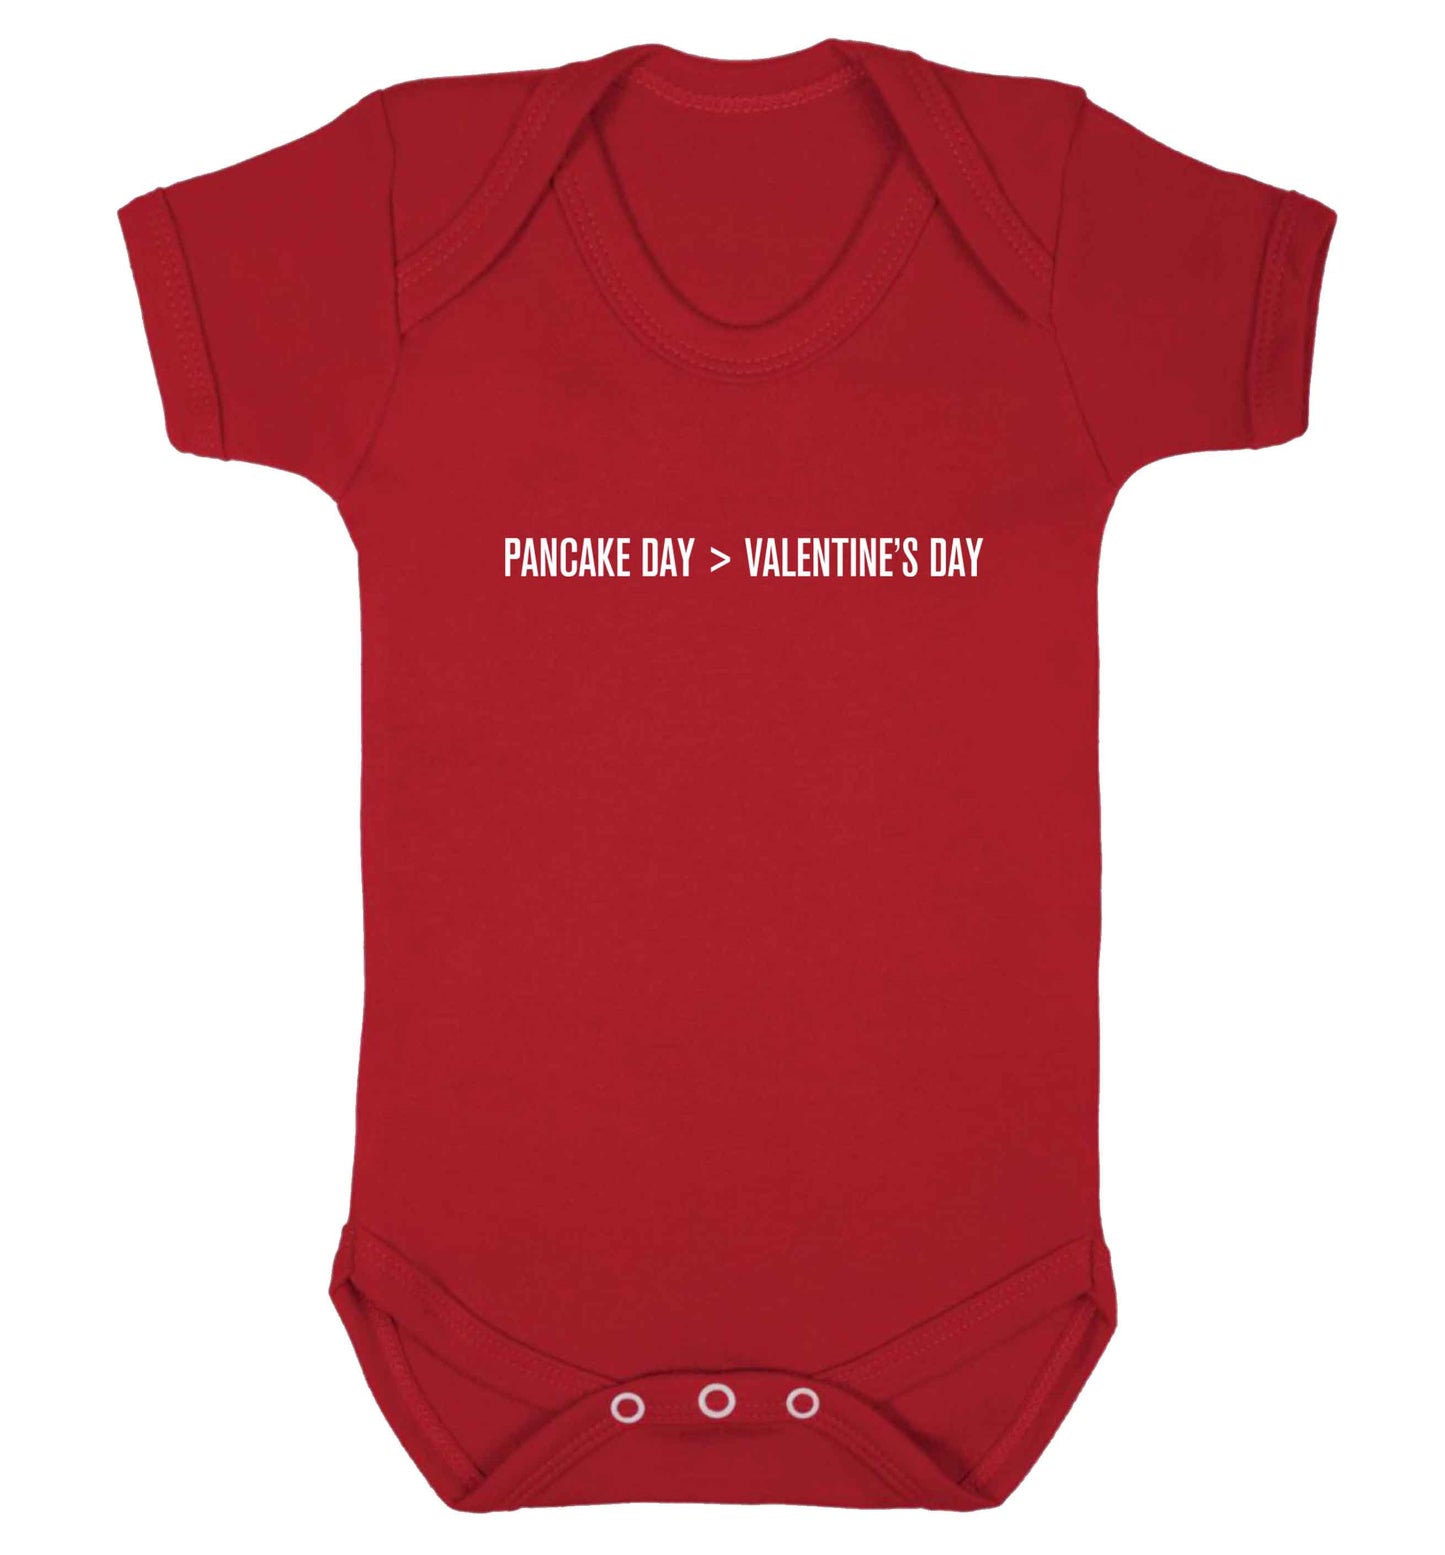 Pancake day > valentines day baby vest red 18-24 months